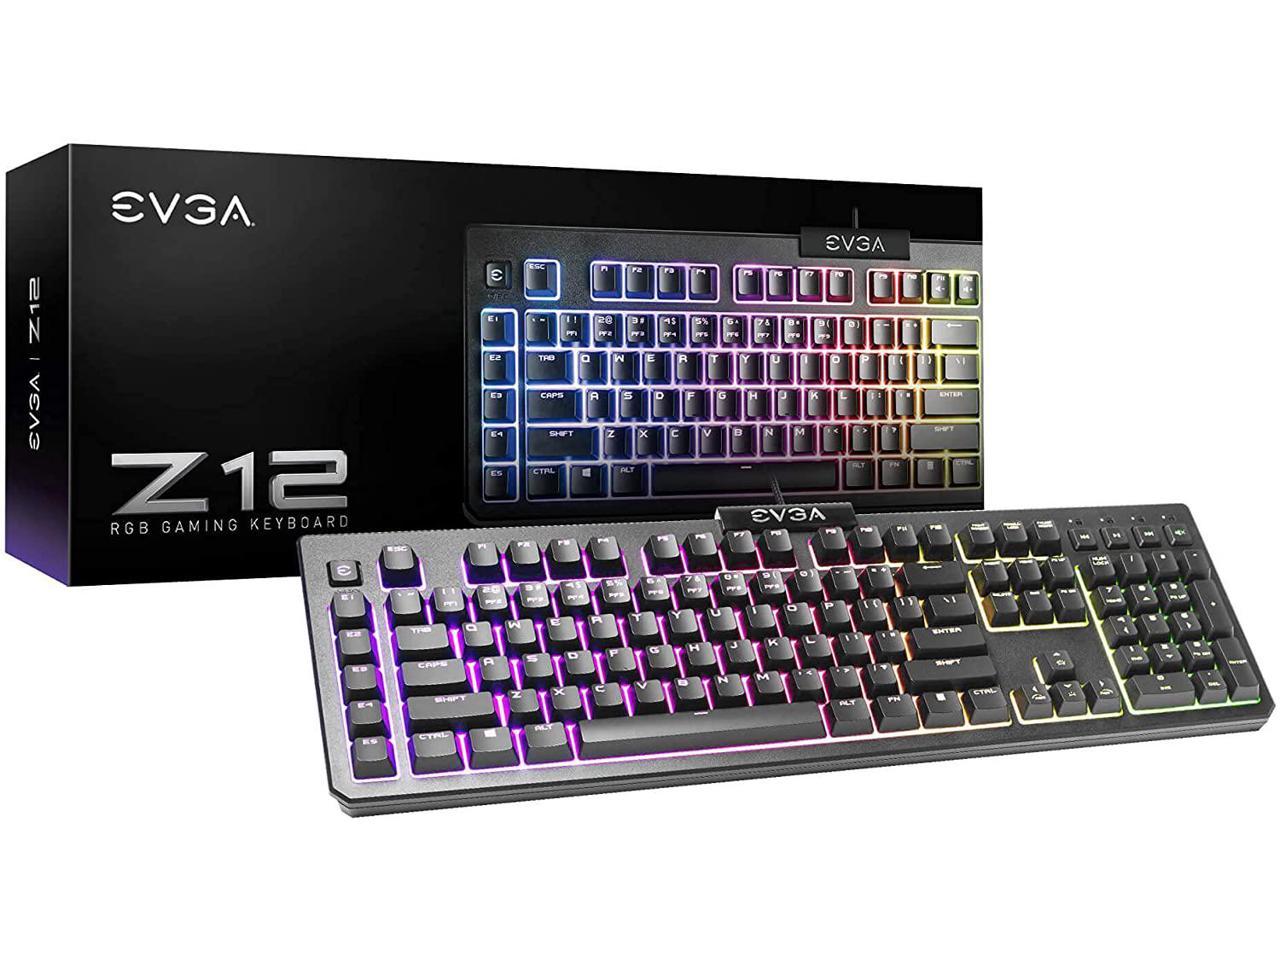 EVGA Z12 RGB Backlit Gaming Keyboard w/ Programmable Macro Keys $13 + Free Shipping